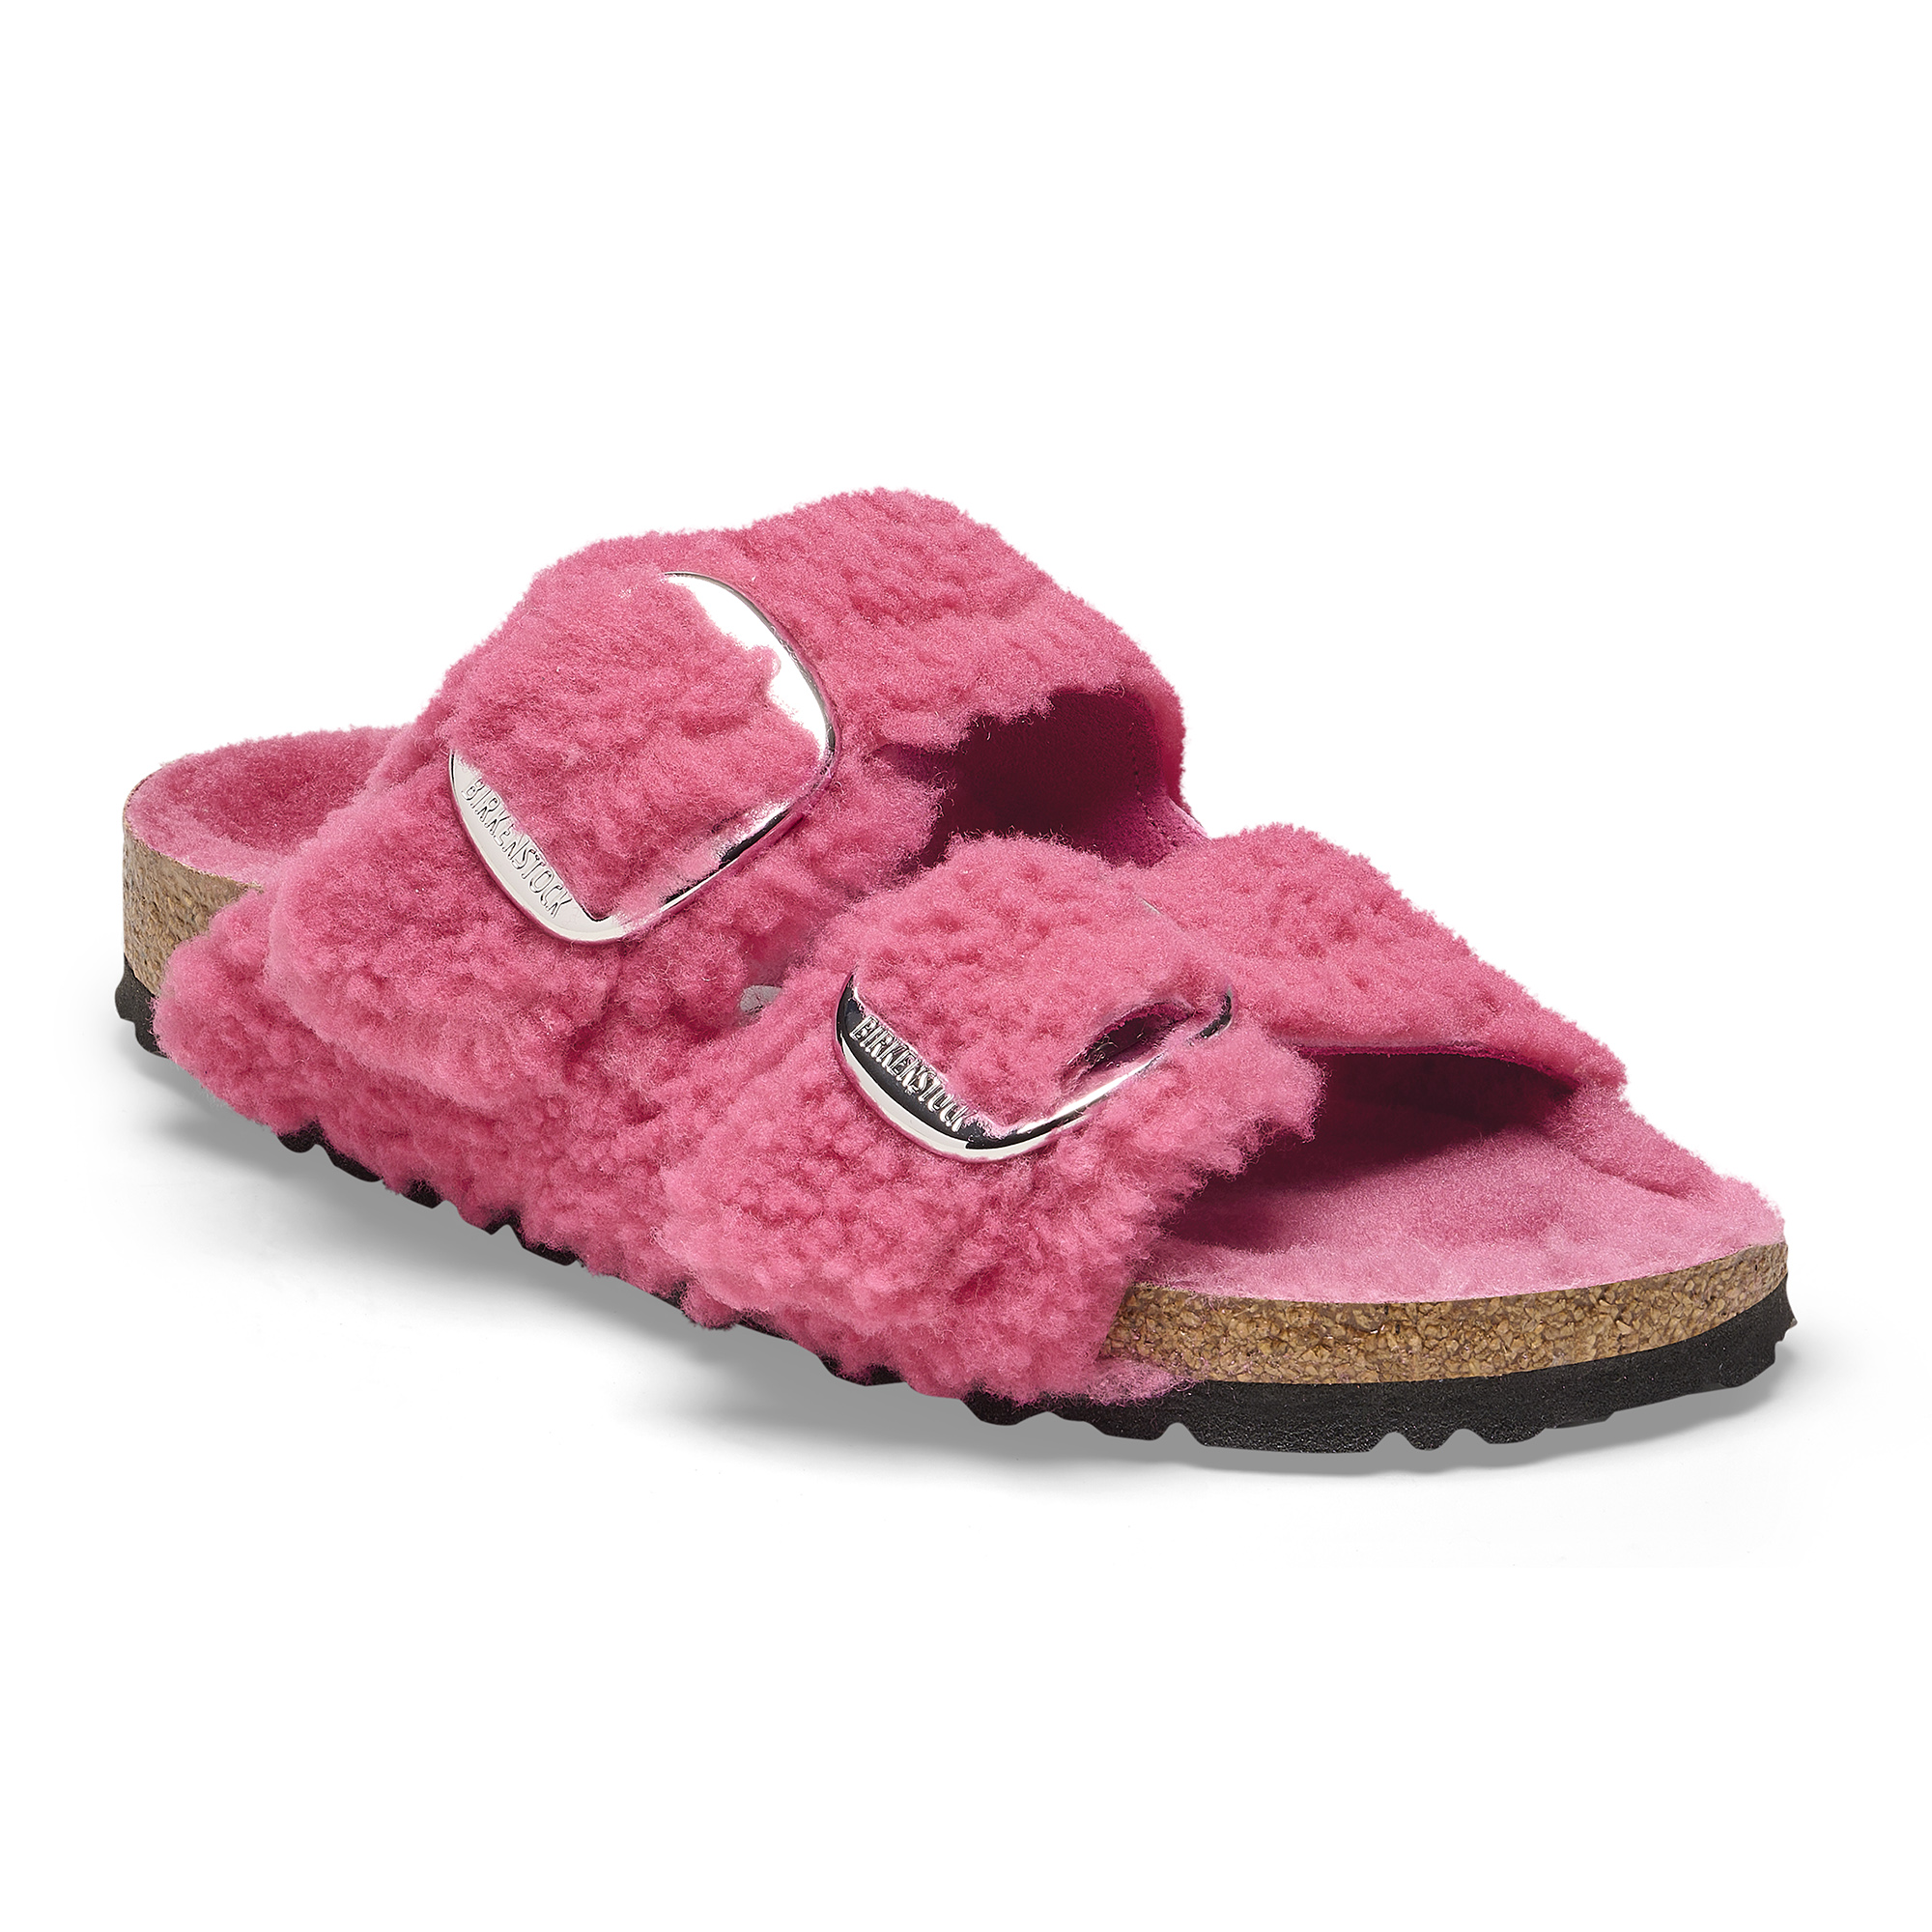 Free People Arizona Teddy Shearling Birkenstock Sandals in Pink